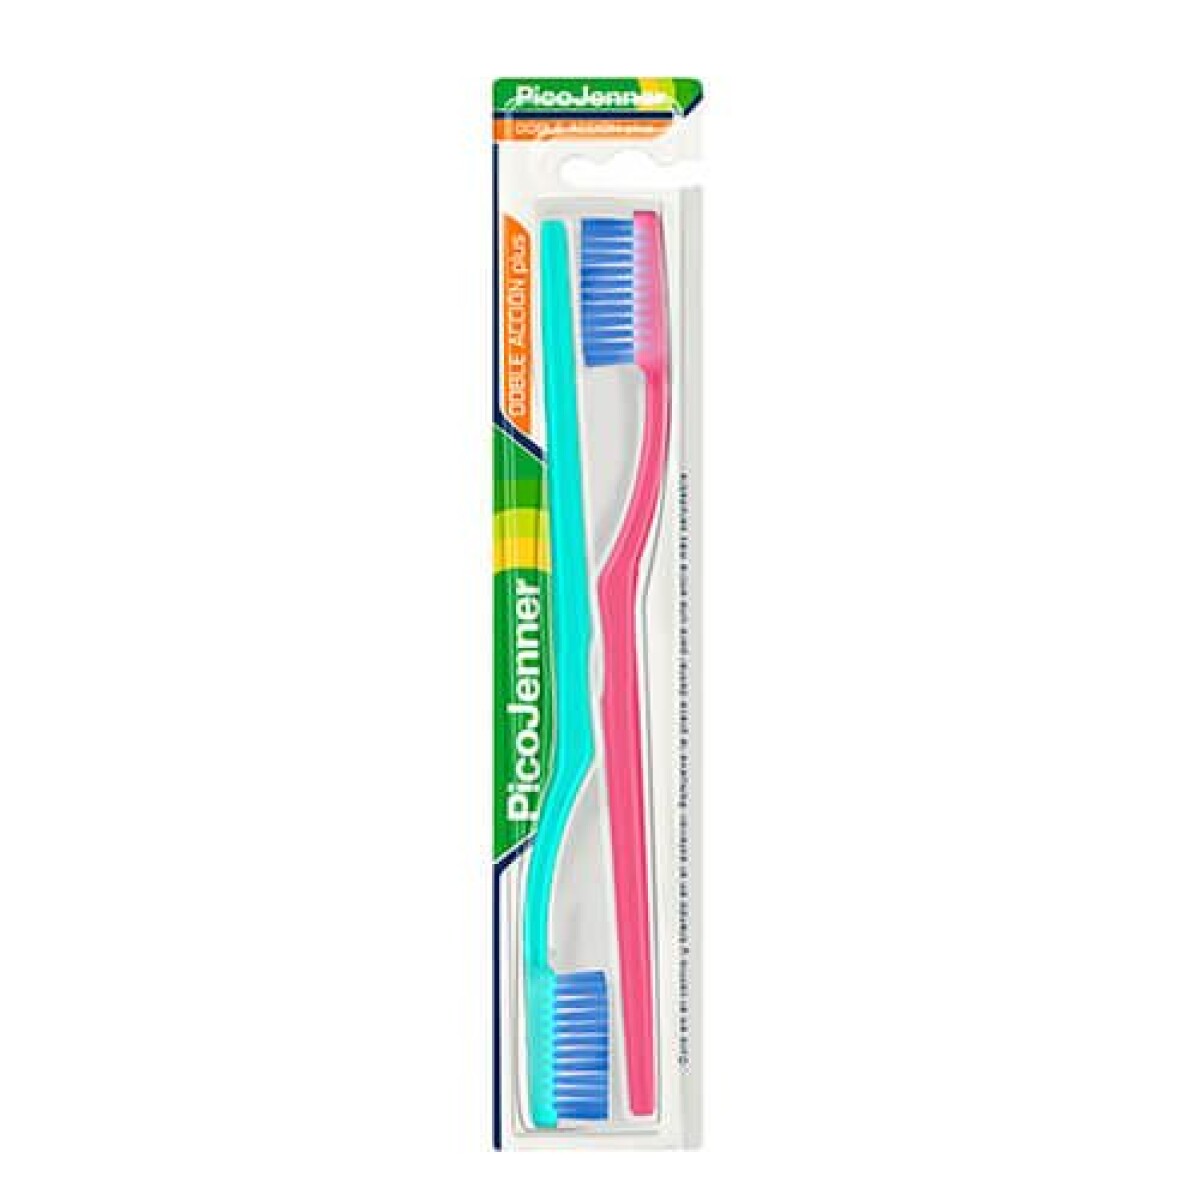 Pack x2 Cepillo dental Pico Jenner - Doble acción Plus 